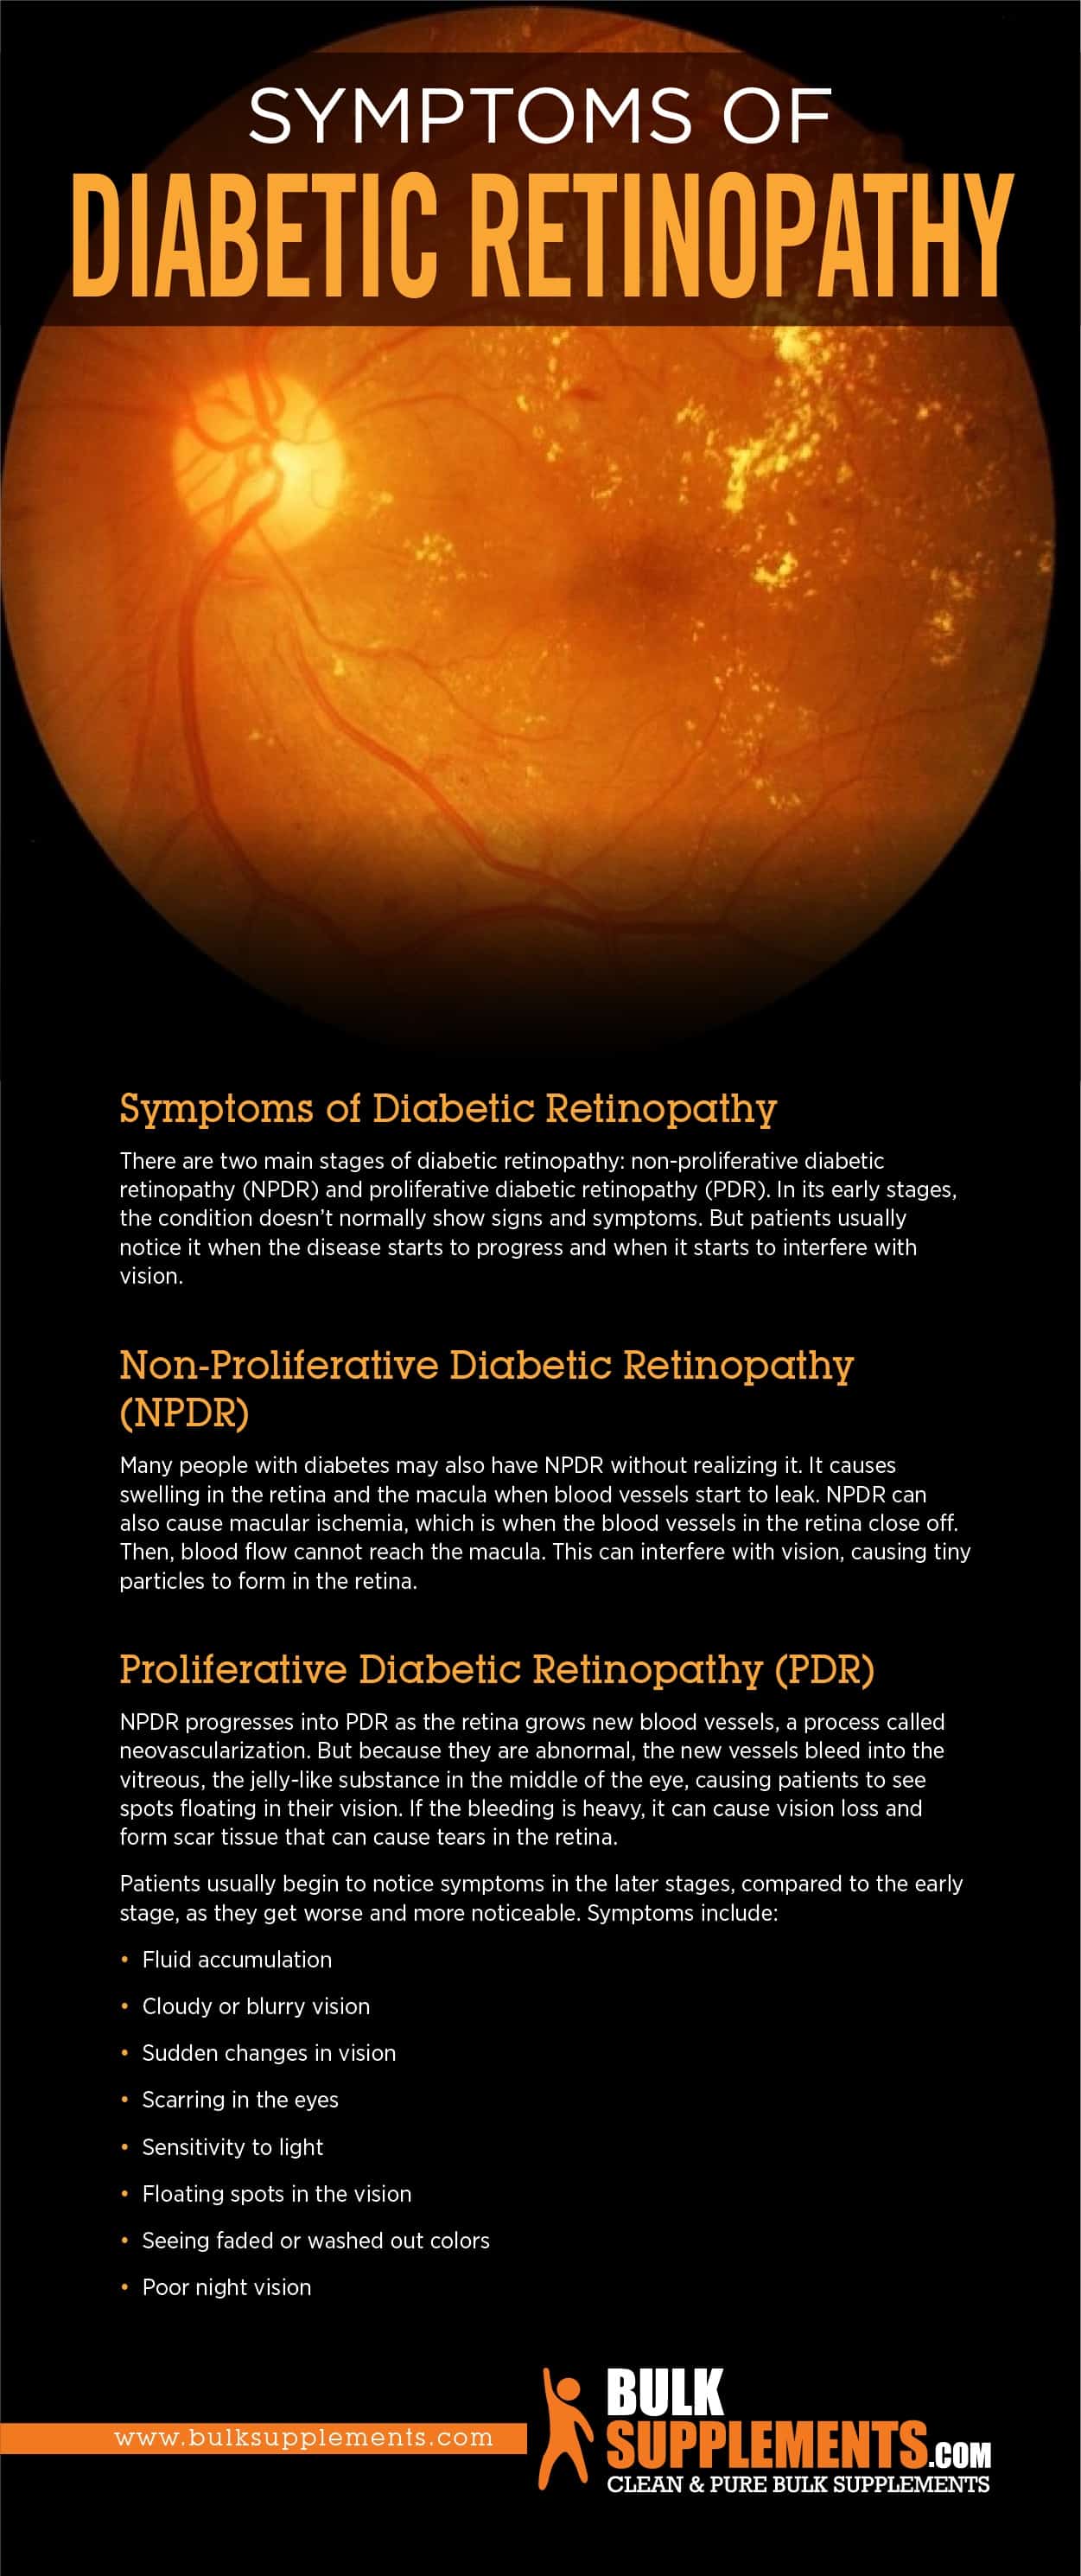 Symptoms of Diabetic Retinopathy